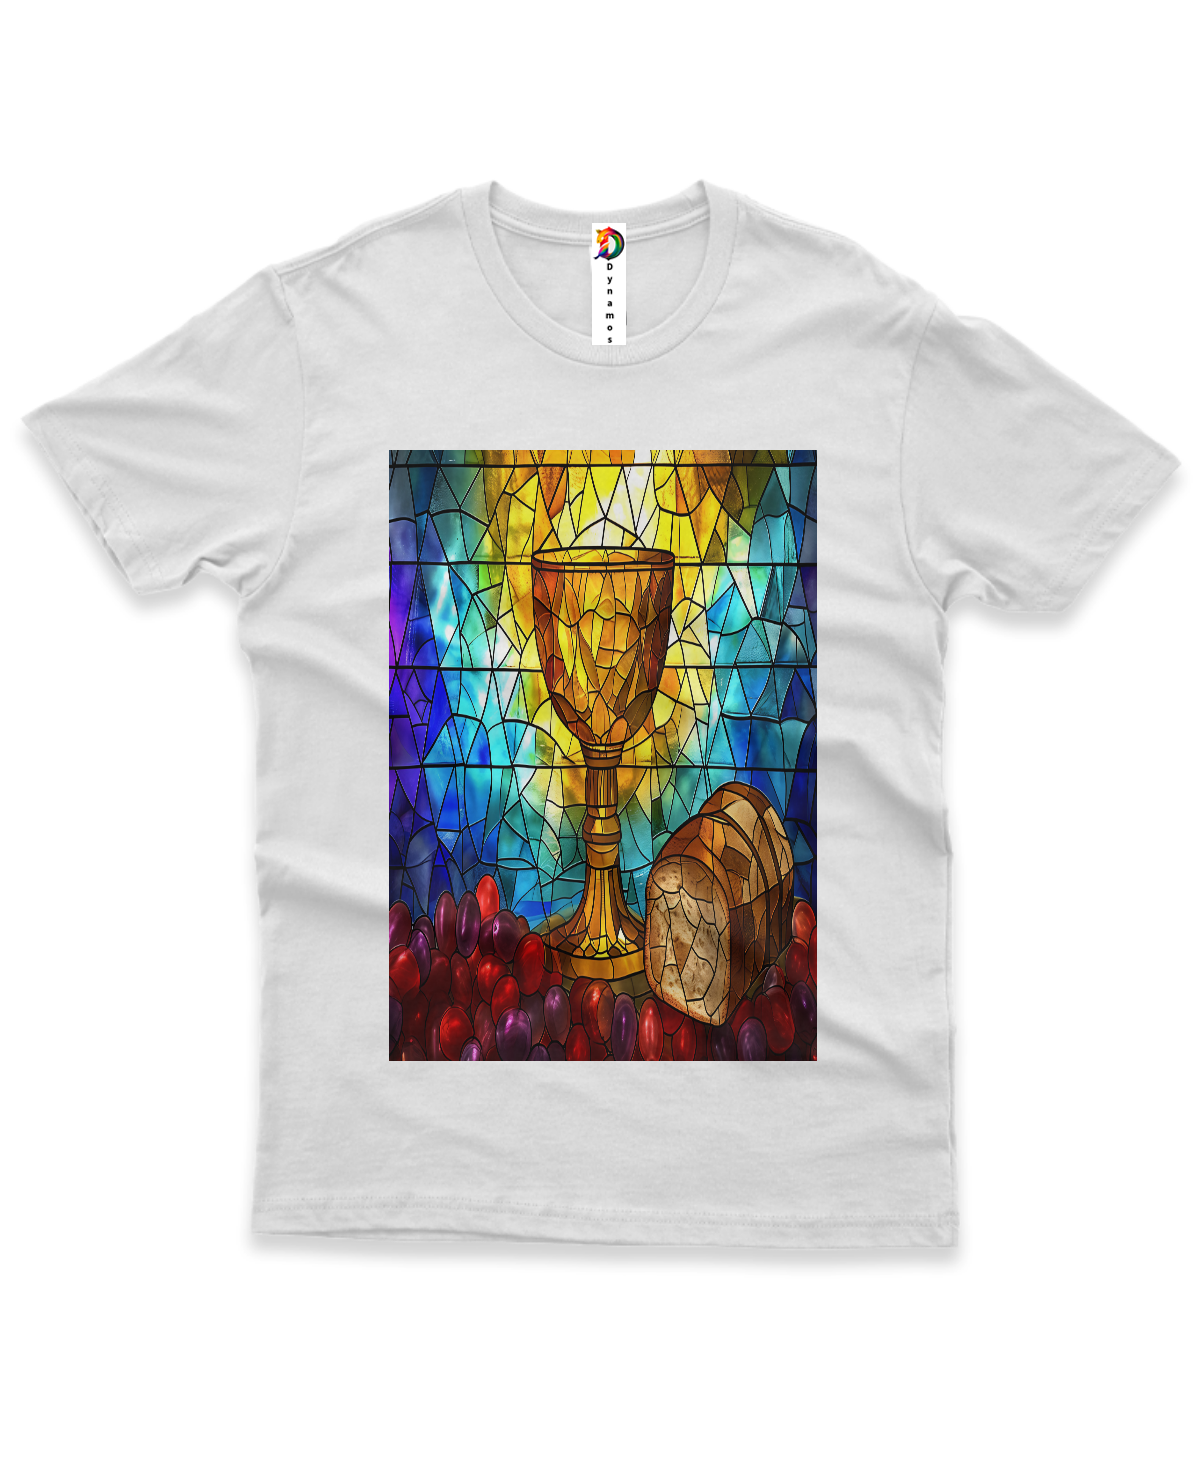 Camiseta Eliomar Masc - Santo Graal - Algodão Pima